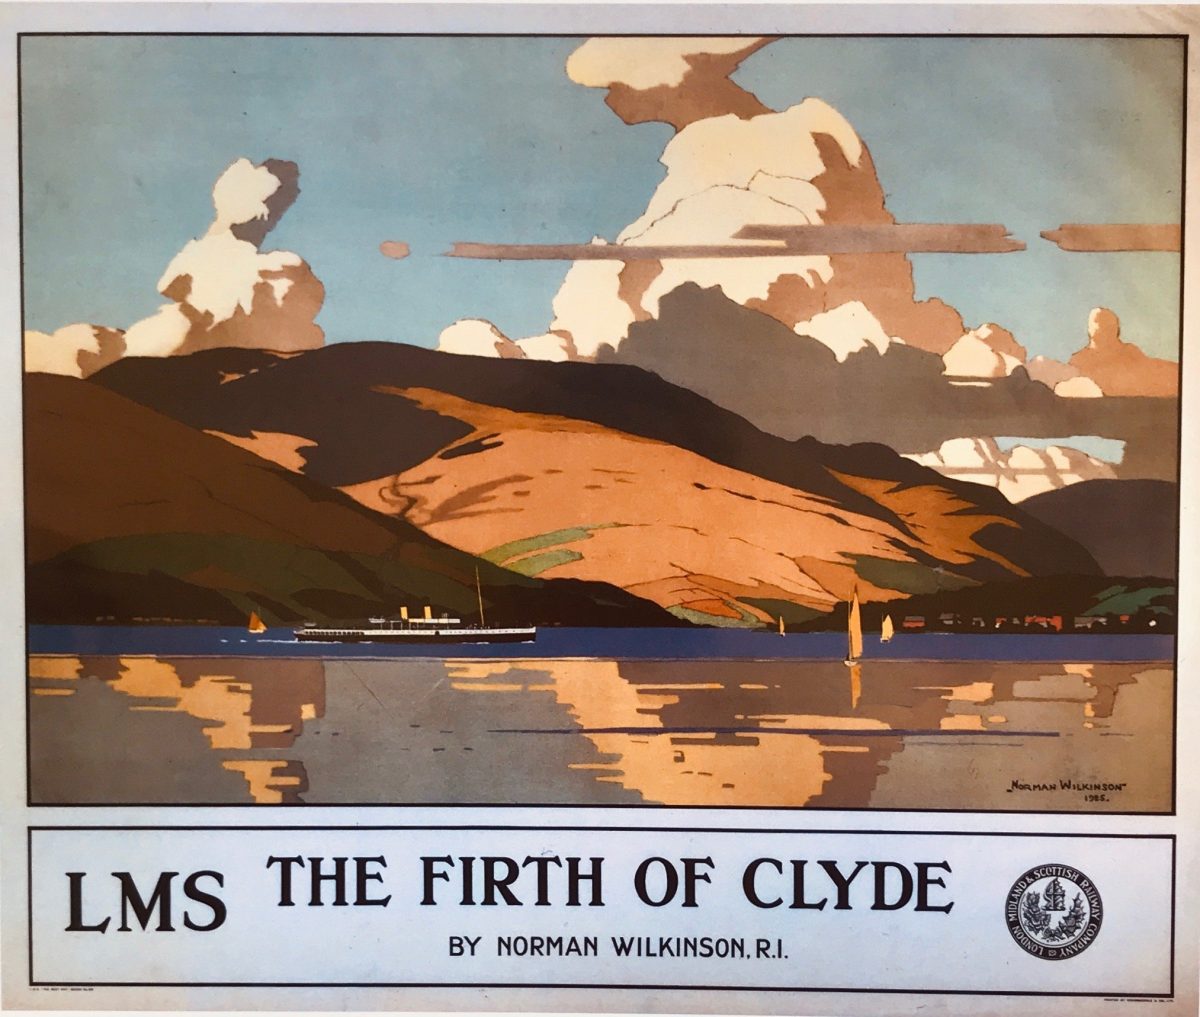 Cruden Bay Railway Vintage Old Advert Poster Scotland Holiday Travel Nature